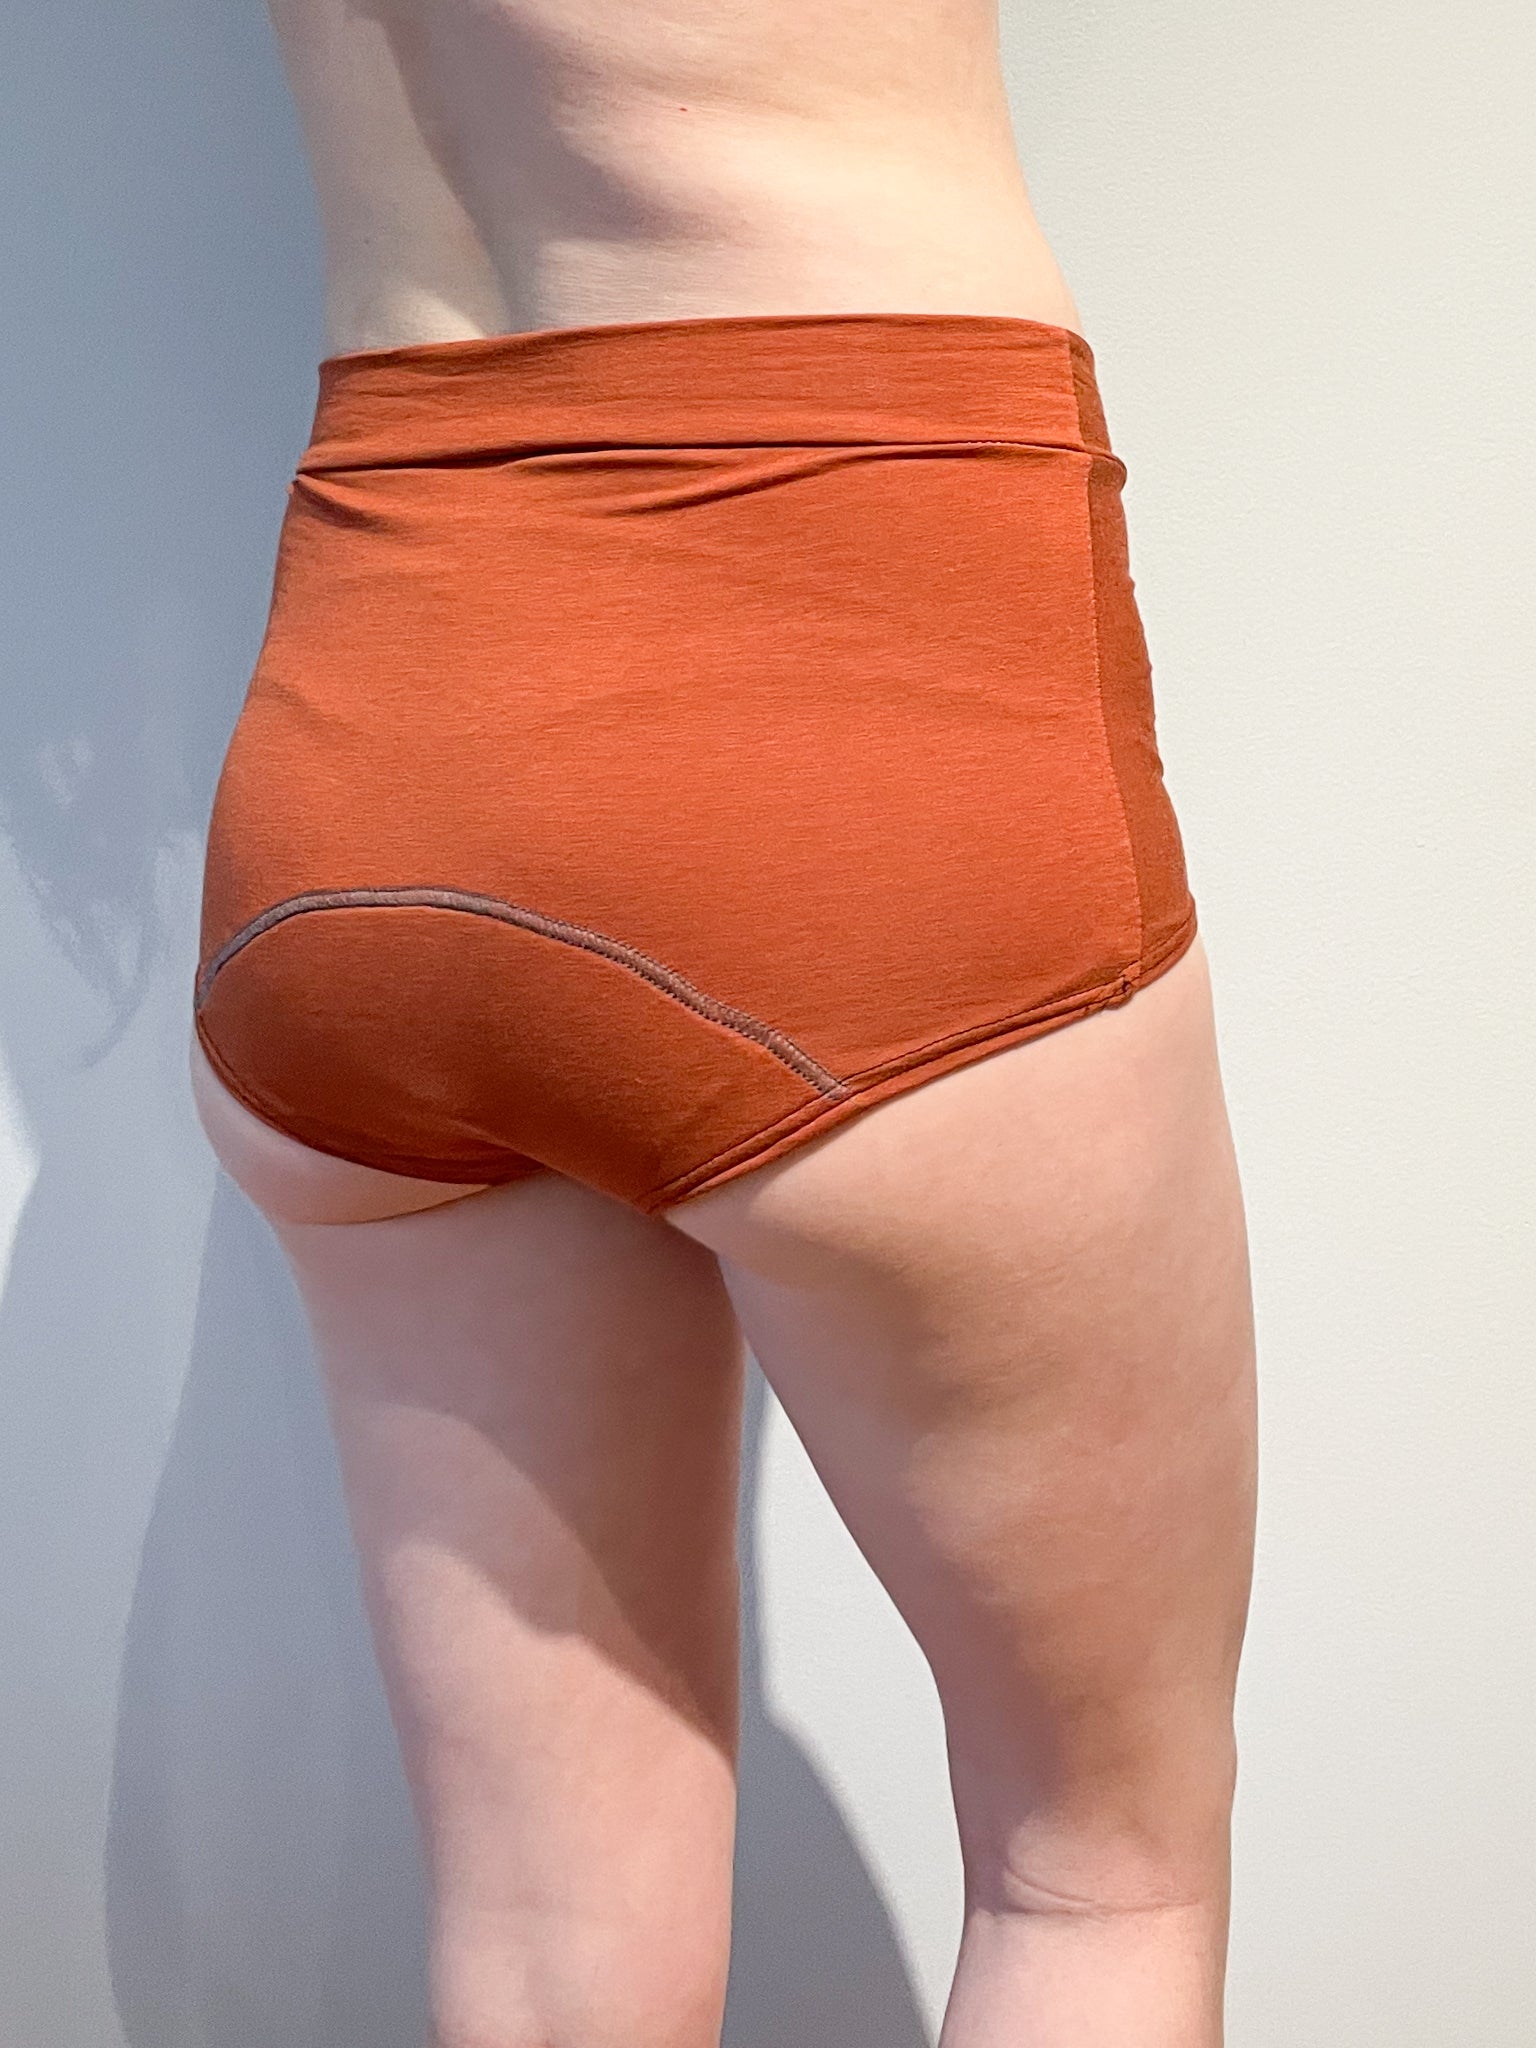 Pantys Period Underwear, bamboo soft - medium flow